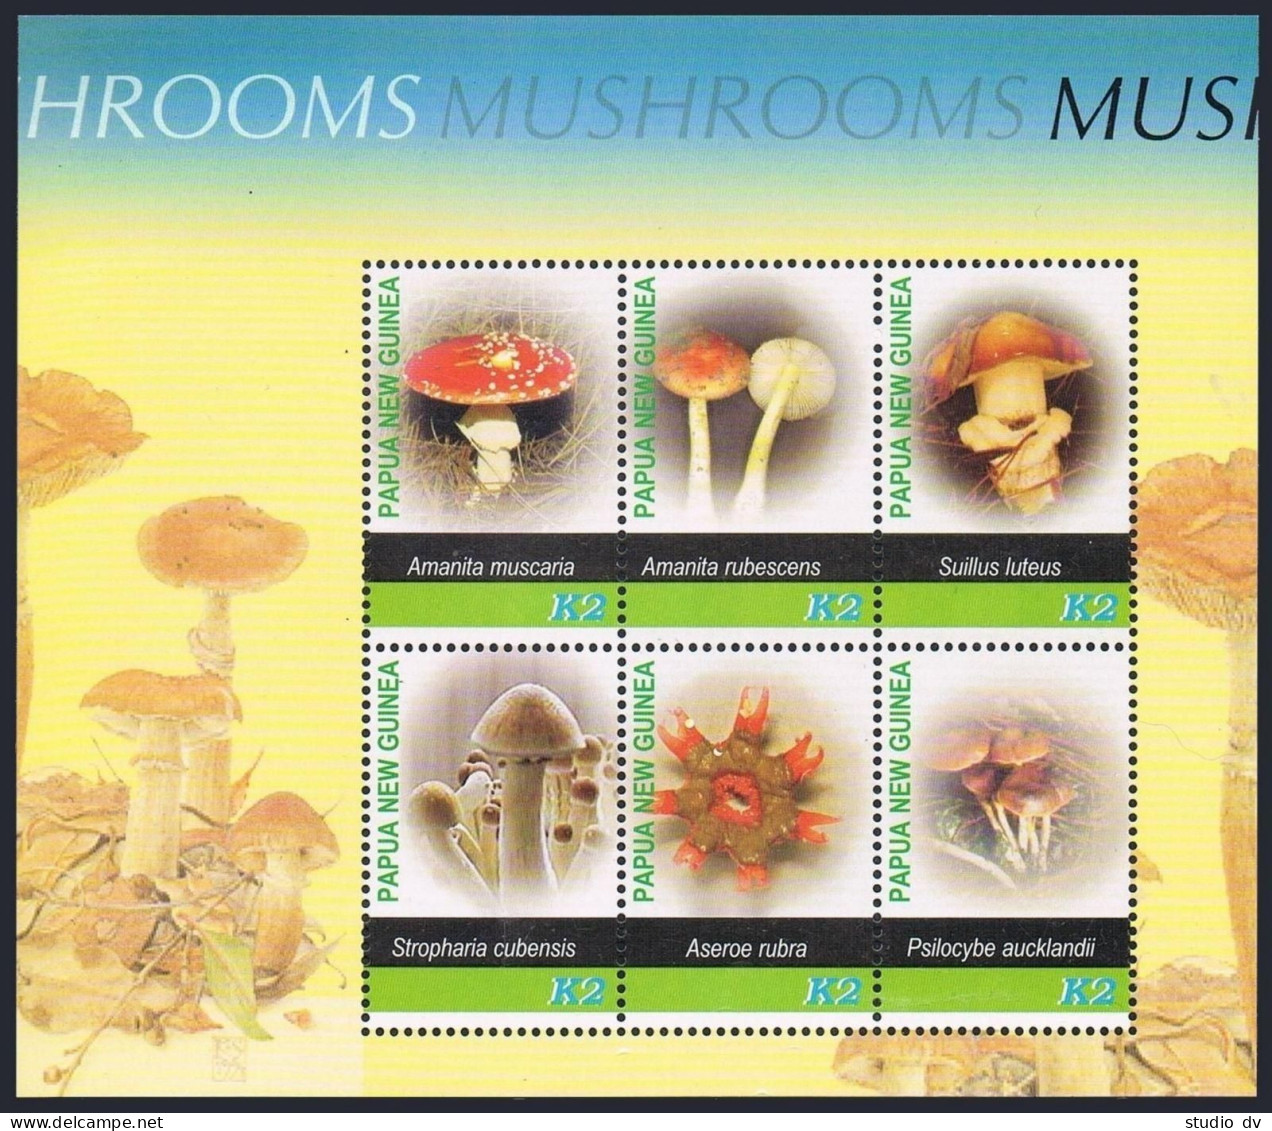 Papua New Guinea 1180 Af,1181 Sheets,MNH. Mushrooms,2005. - Papua New Guinea